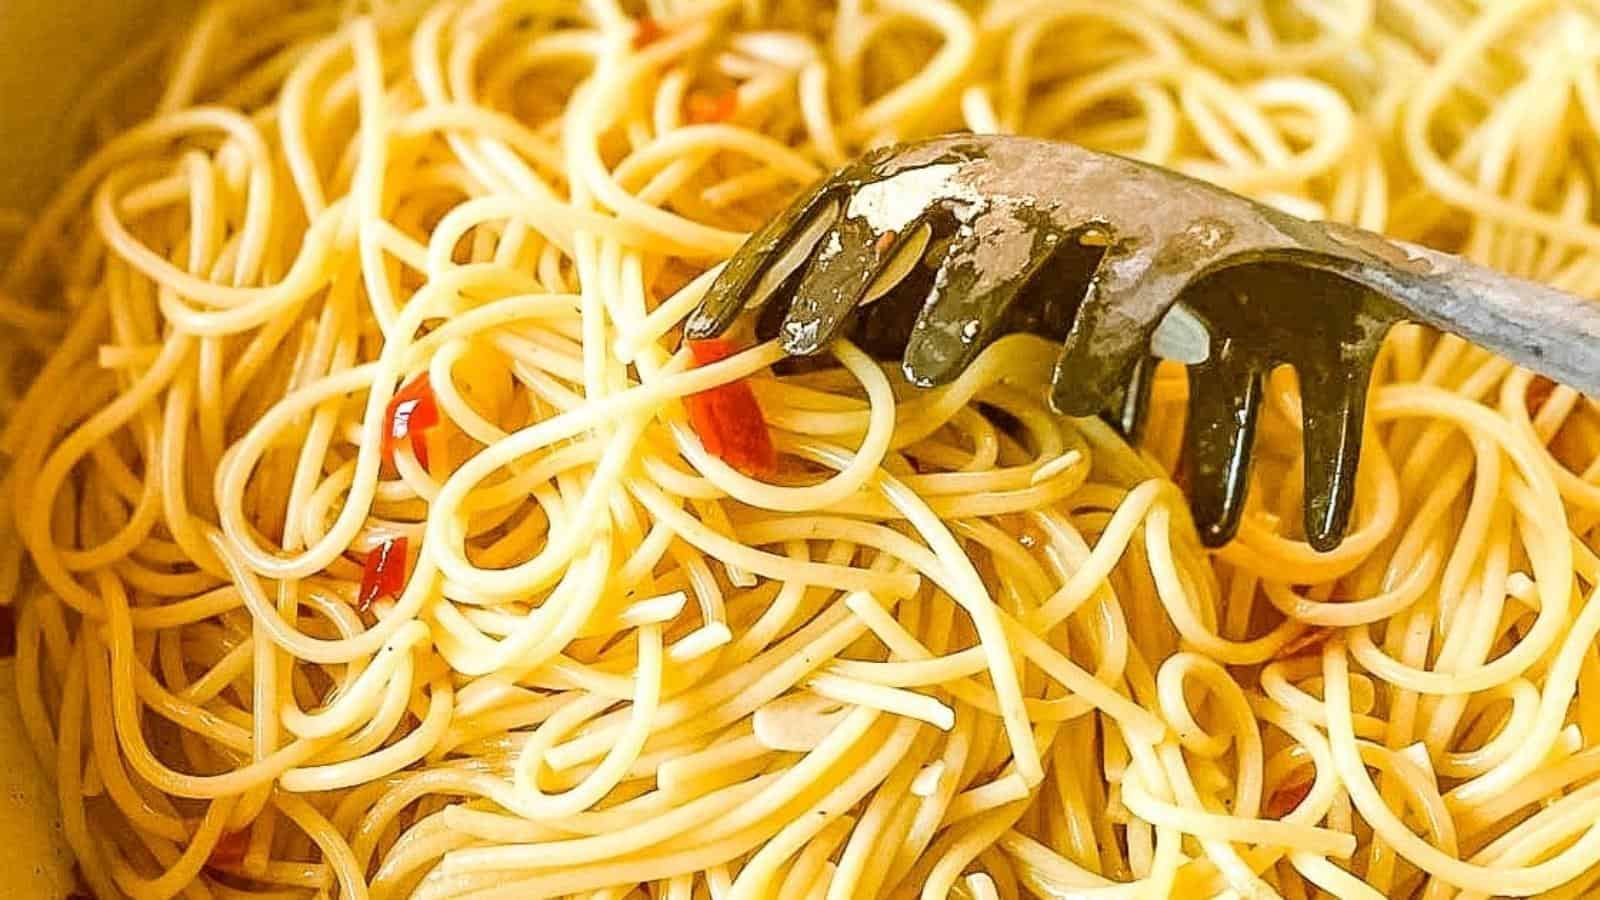 pasta aglio olio e peperoncino is mixed with a black pasta fork.